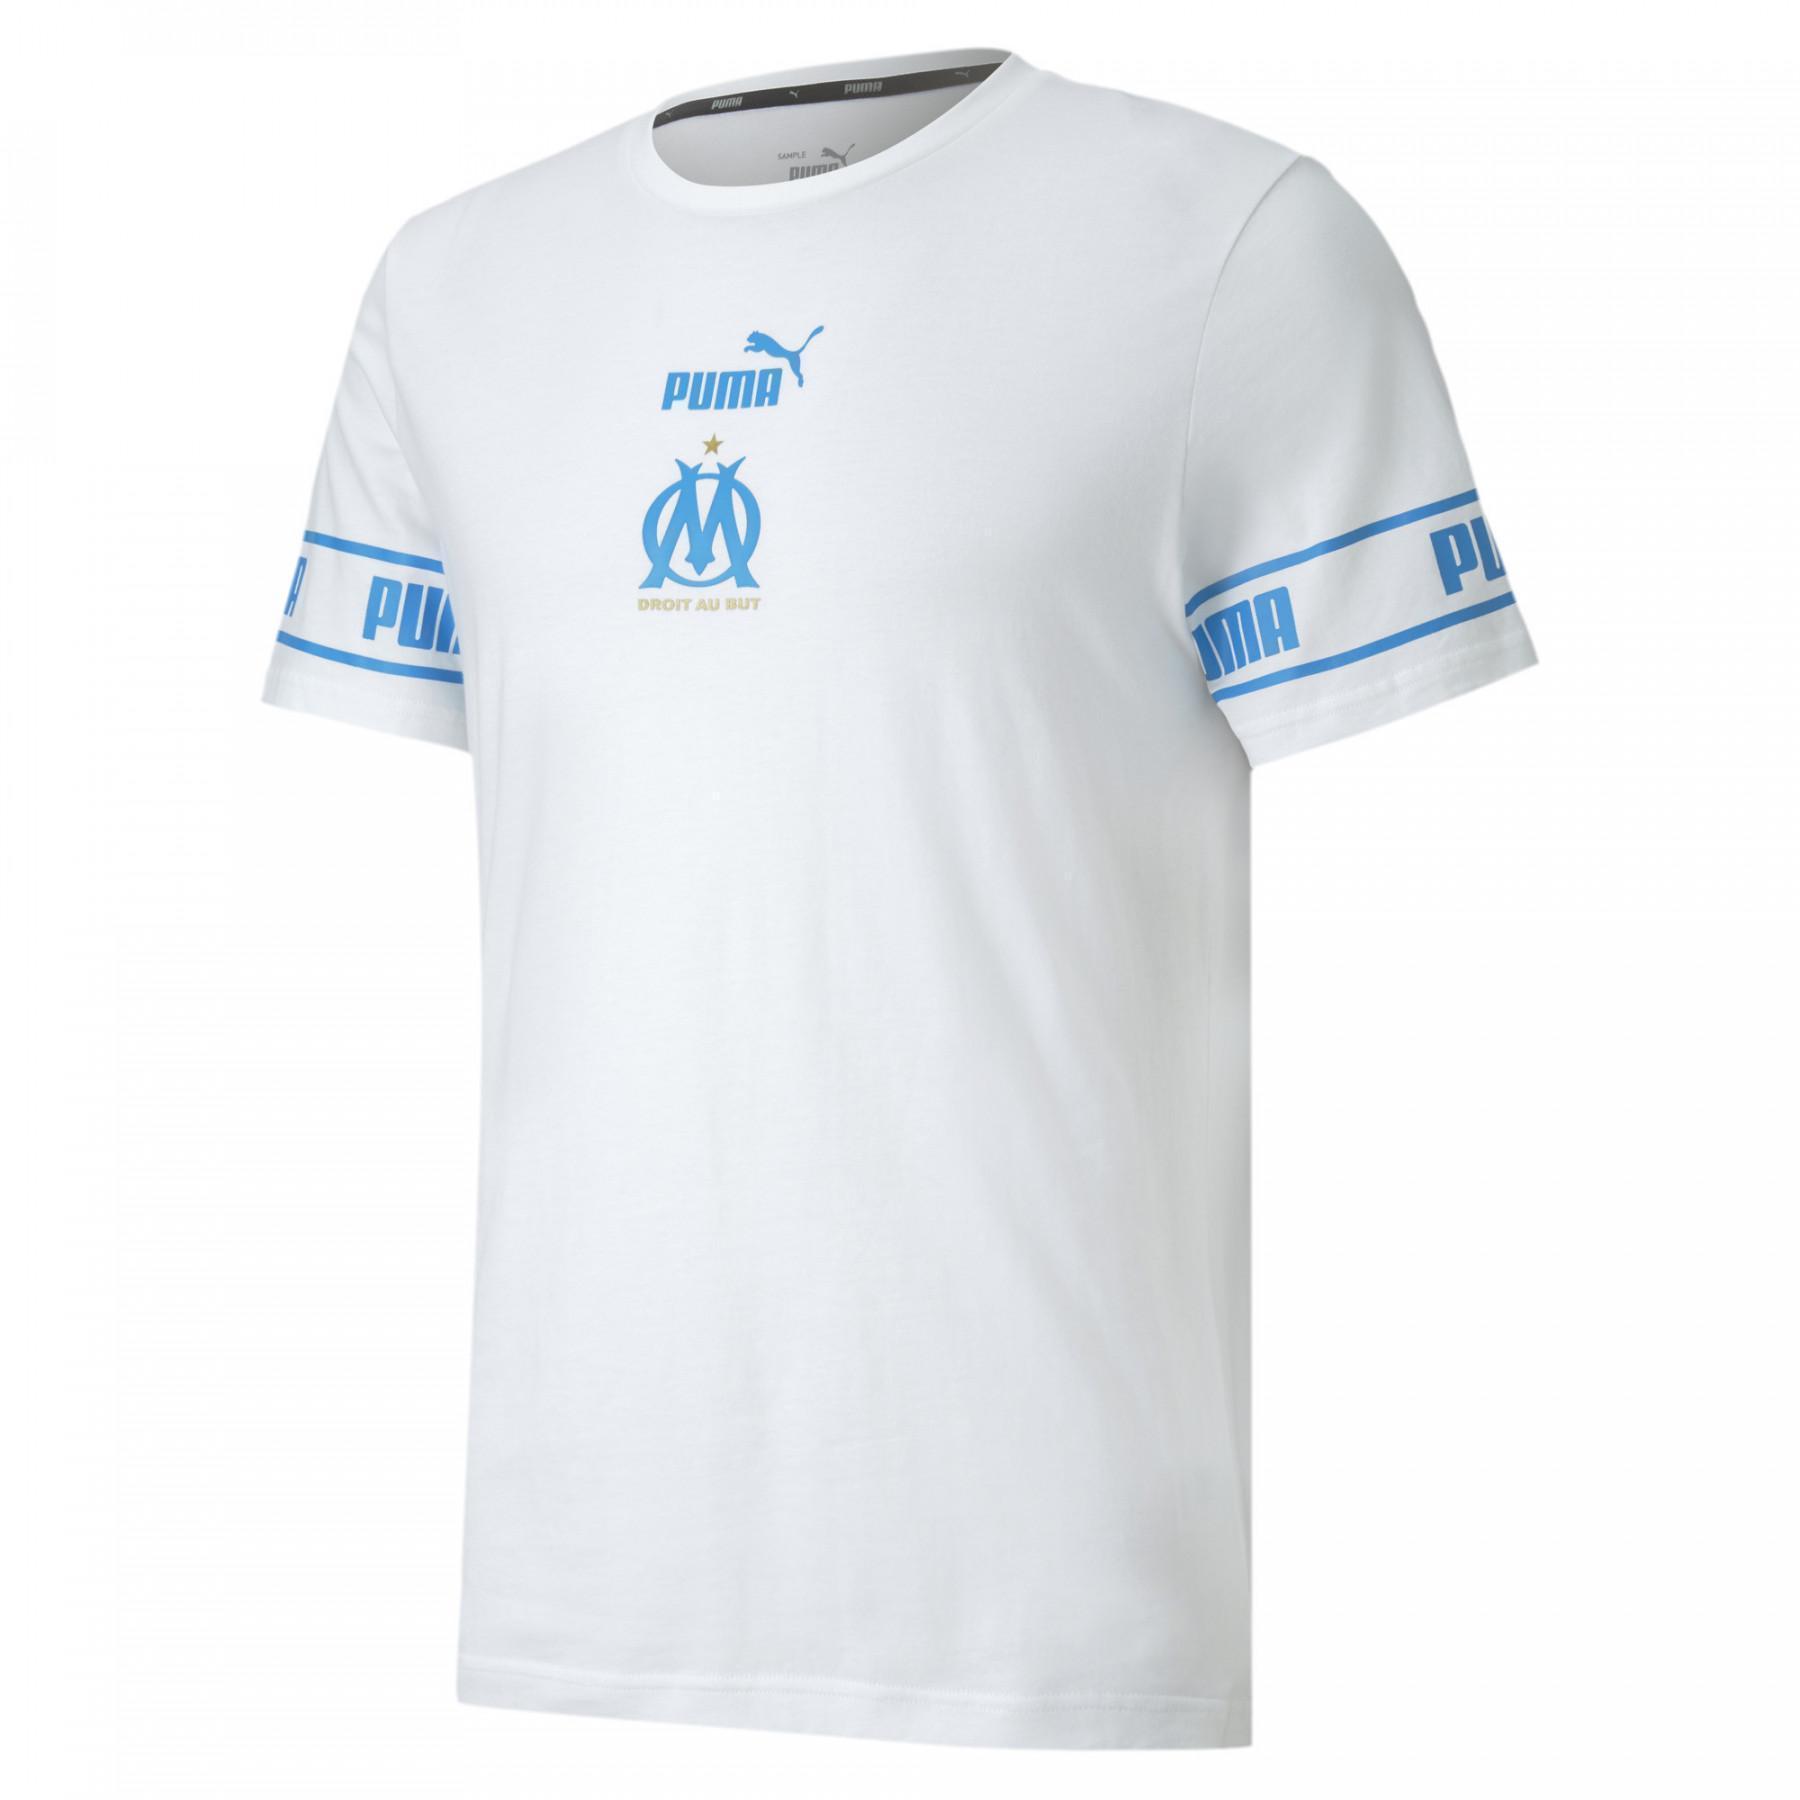 Camiseta OM FtblCulture II 2020/21